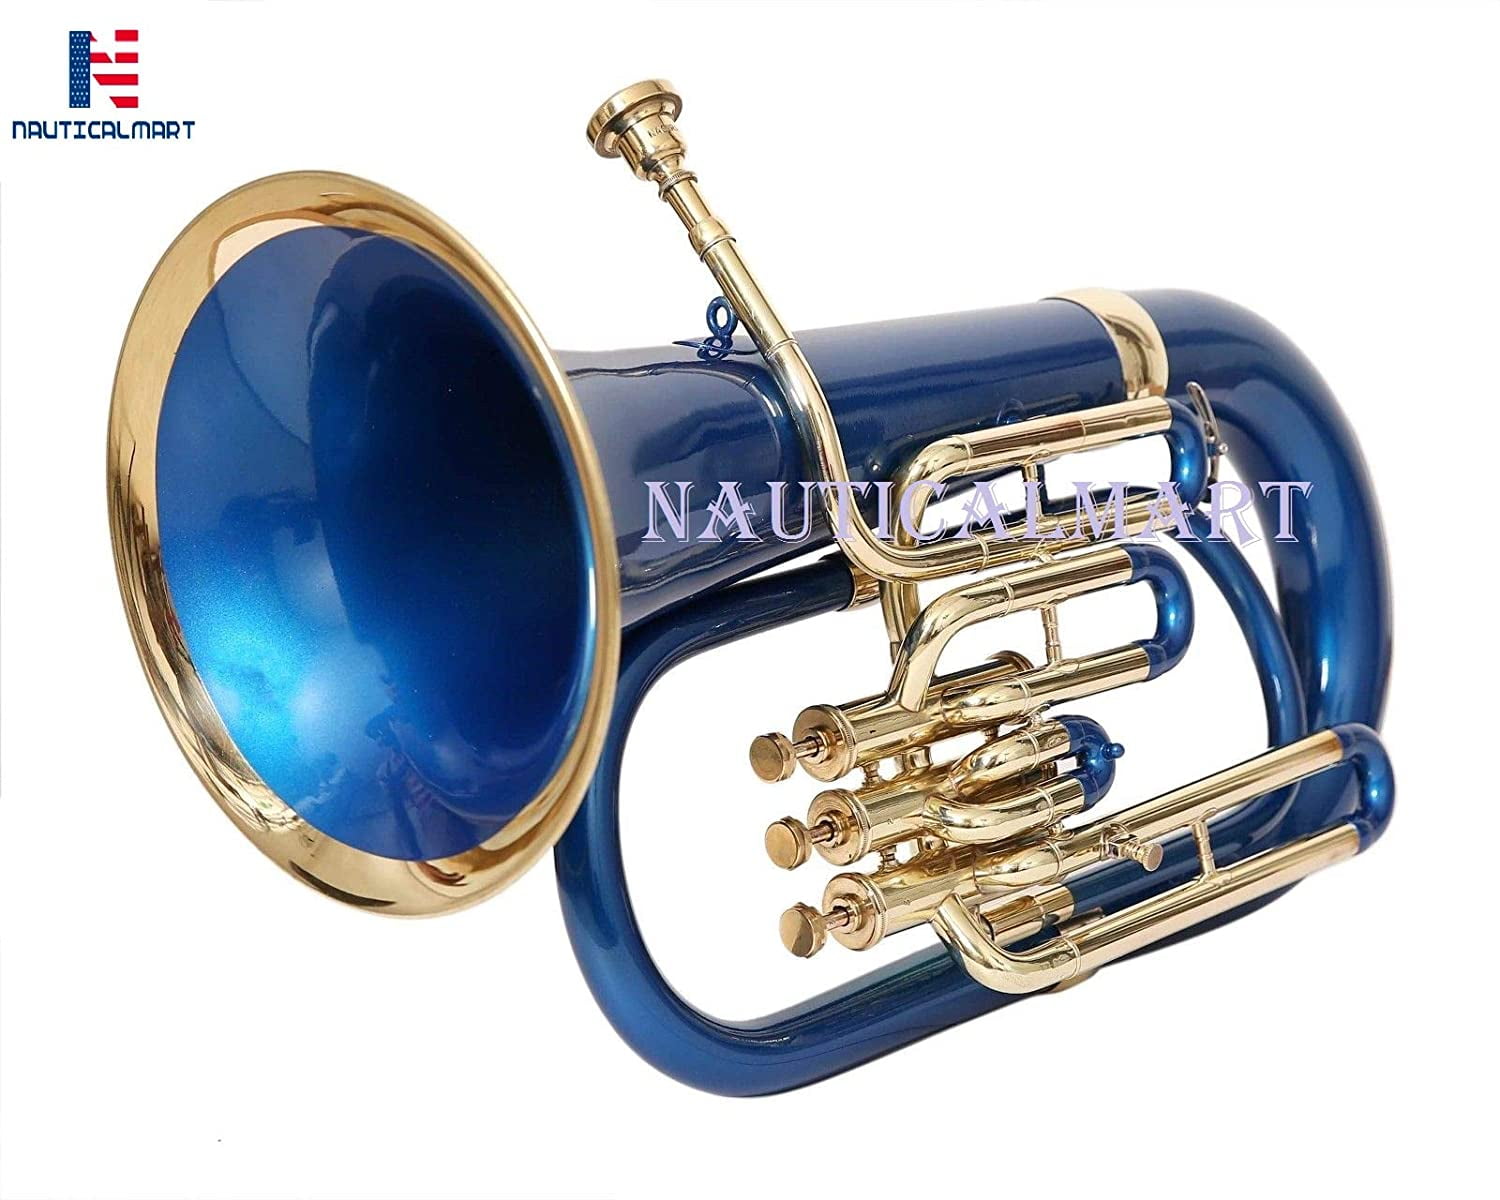 NAUTICAL BRASS ANTIQUE Trumpet Bb Pocket Student Trumpet 3 Valve